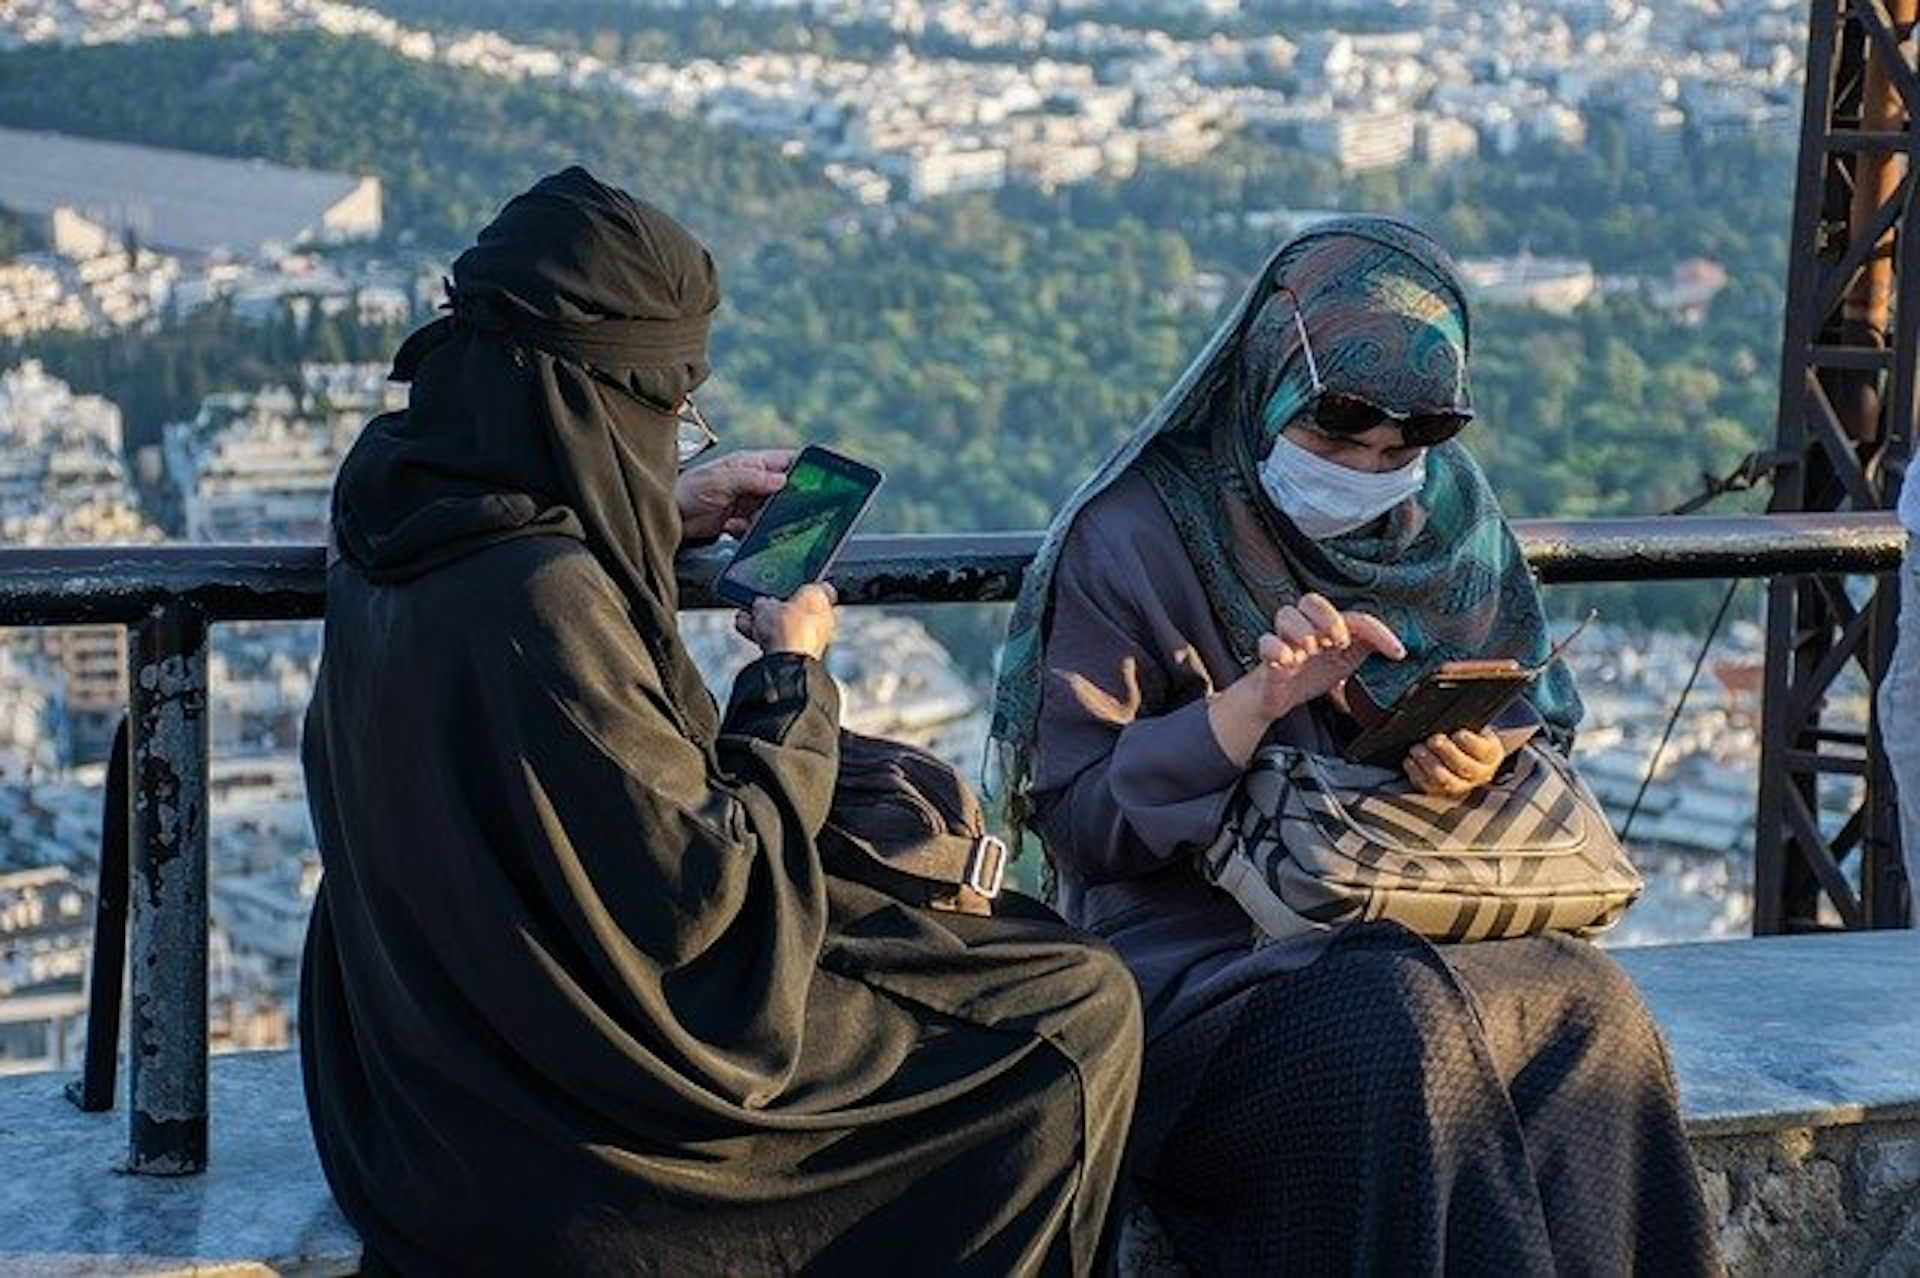 One year on, Muslim women reflect on image